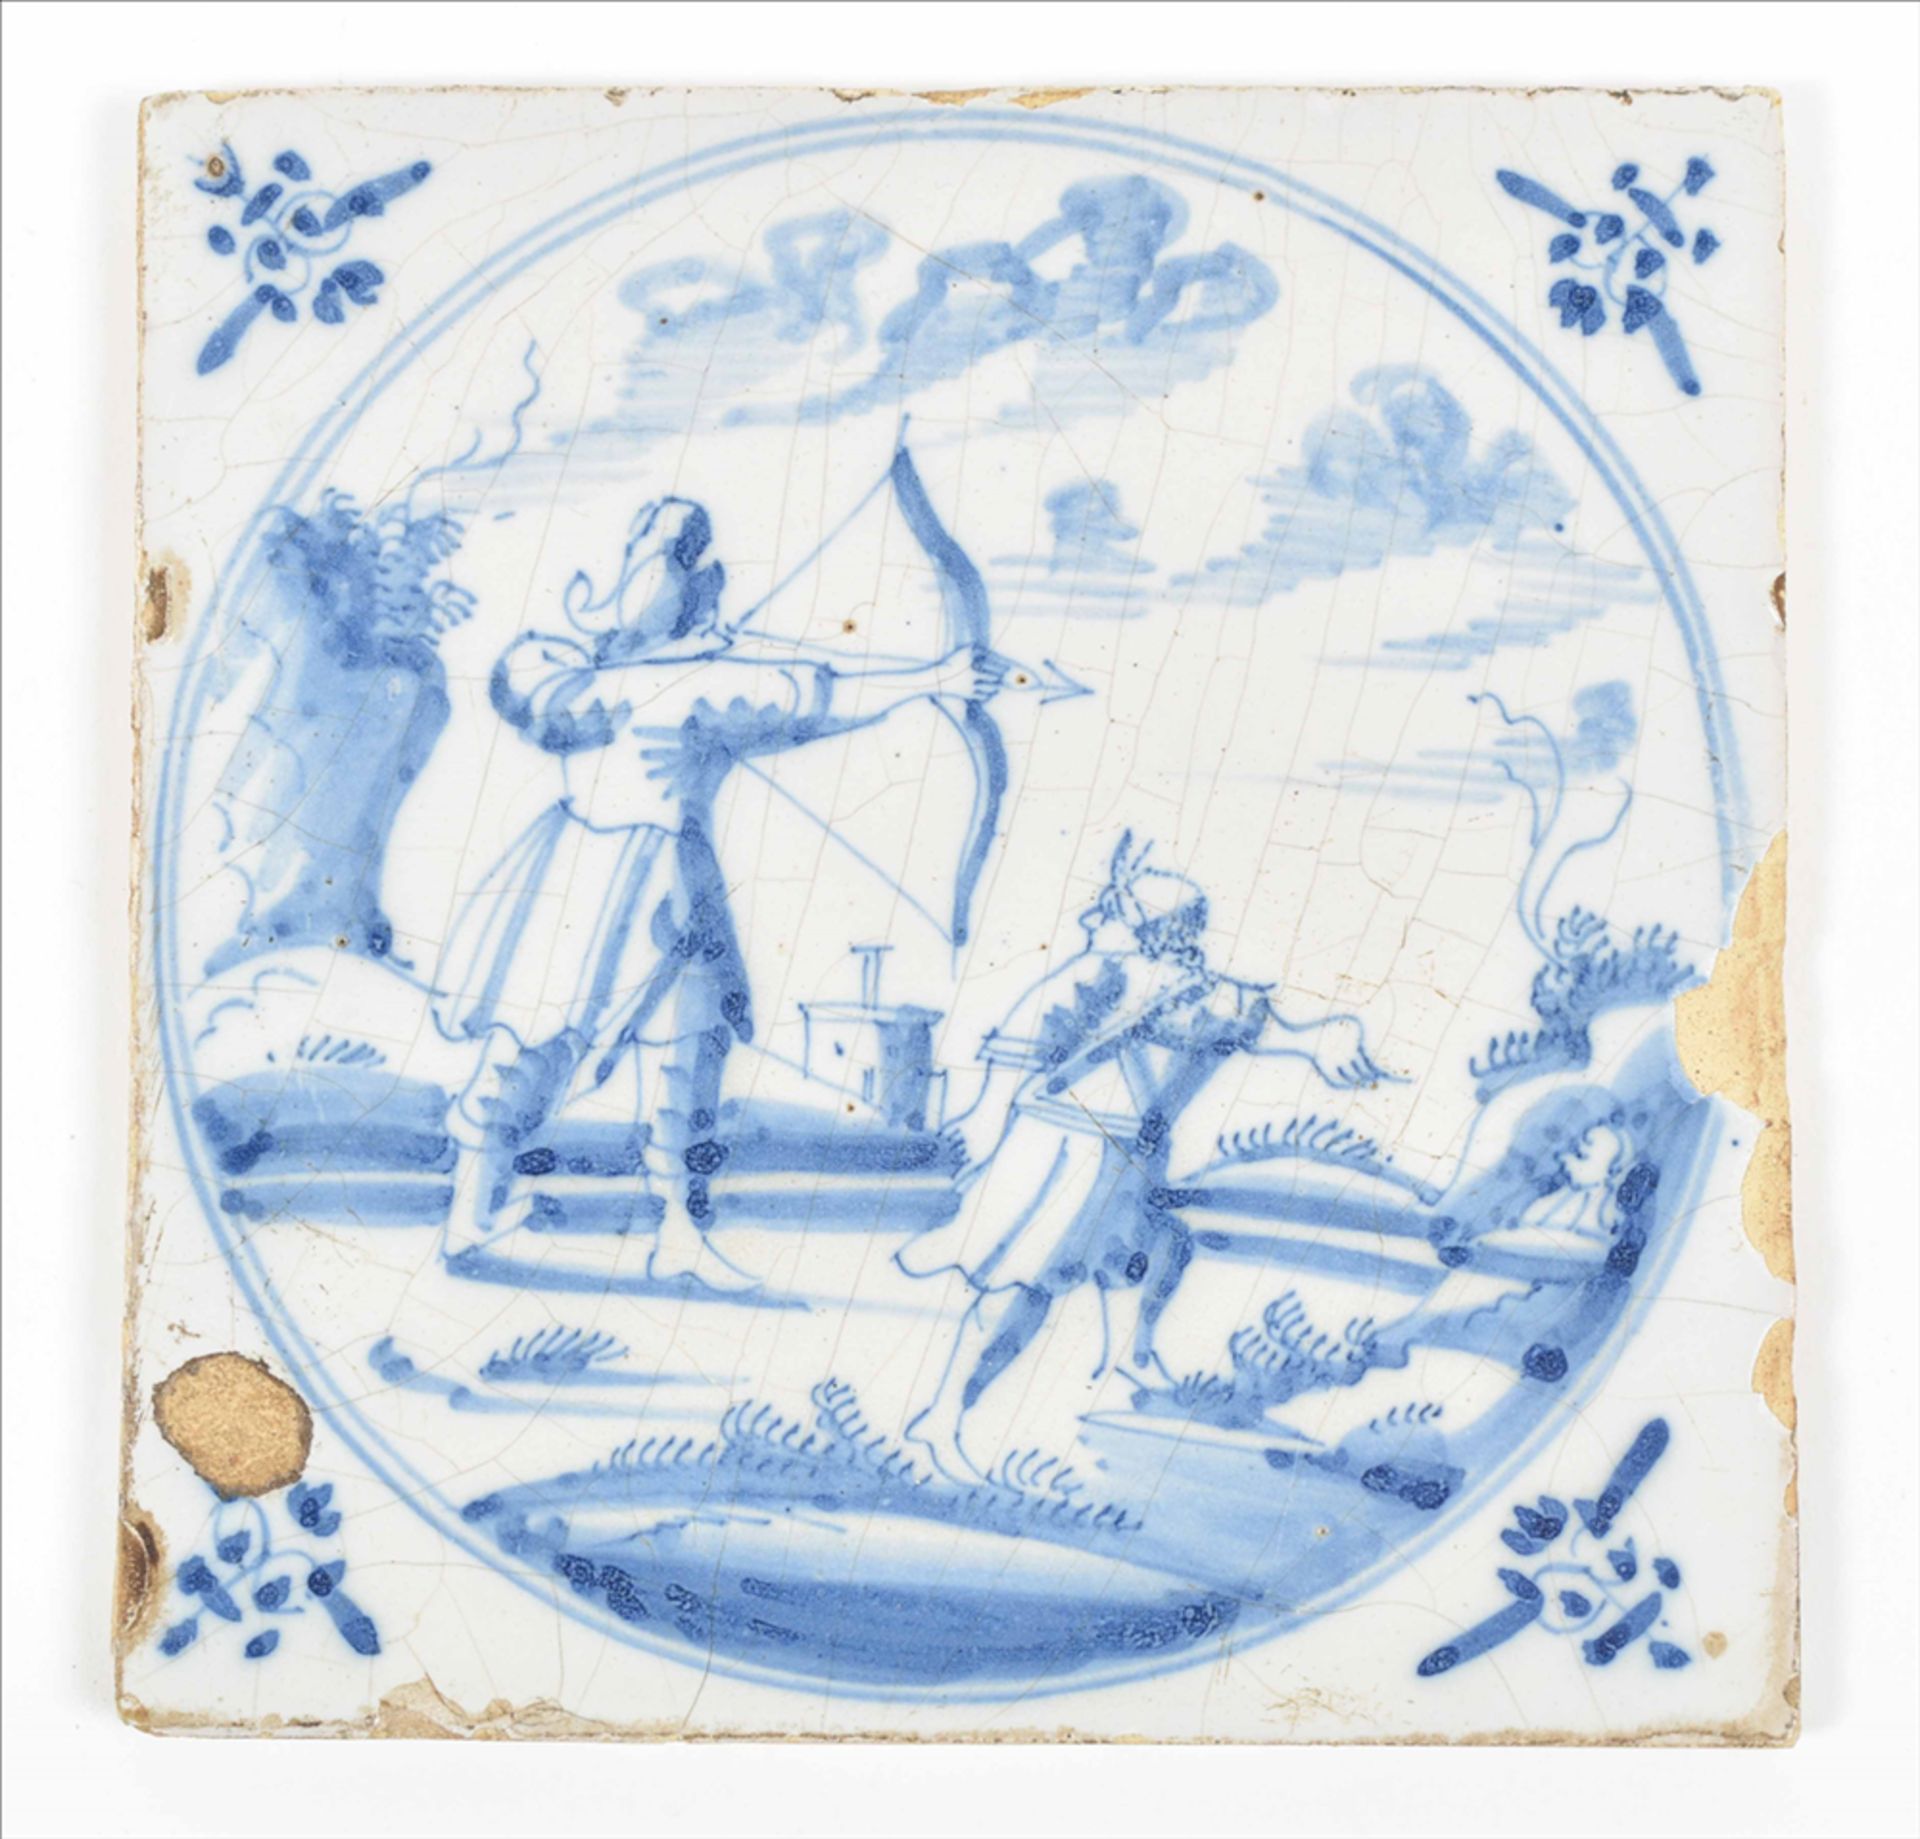 Nine Dutch tiles with biblical scenes - Image 7 of 7